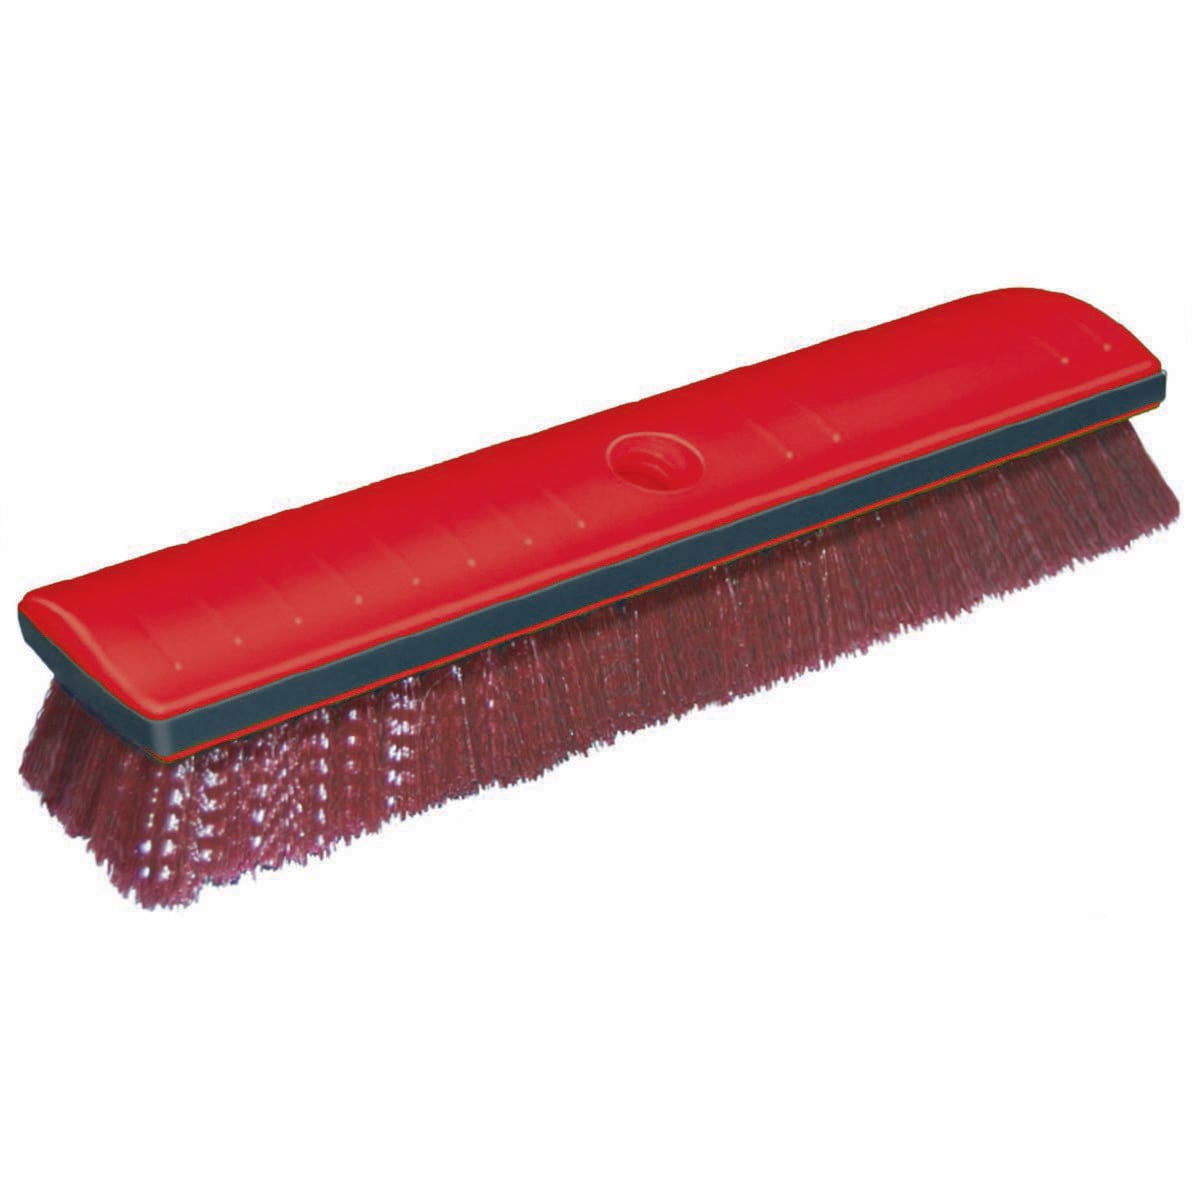 2 x Traditional Floor Scrubbing Brushes Hard Bristle 8" Wooden Hand Deck Broom 